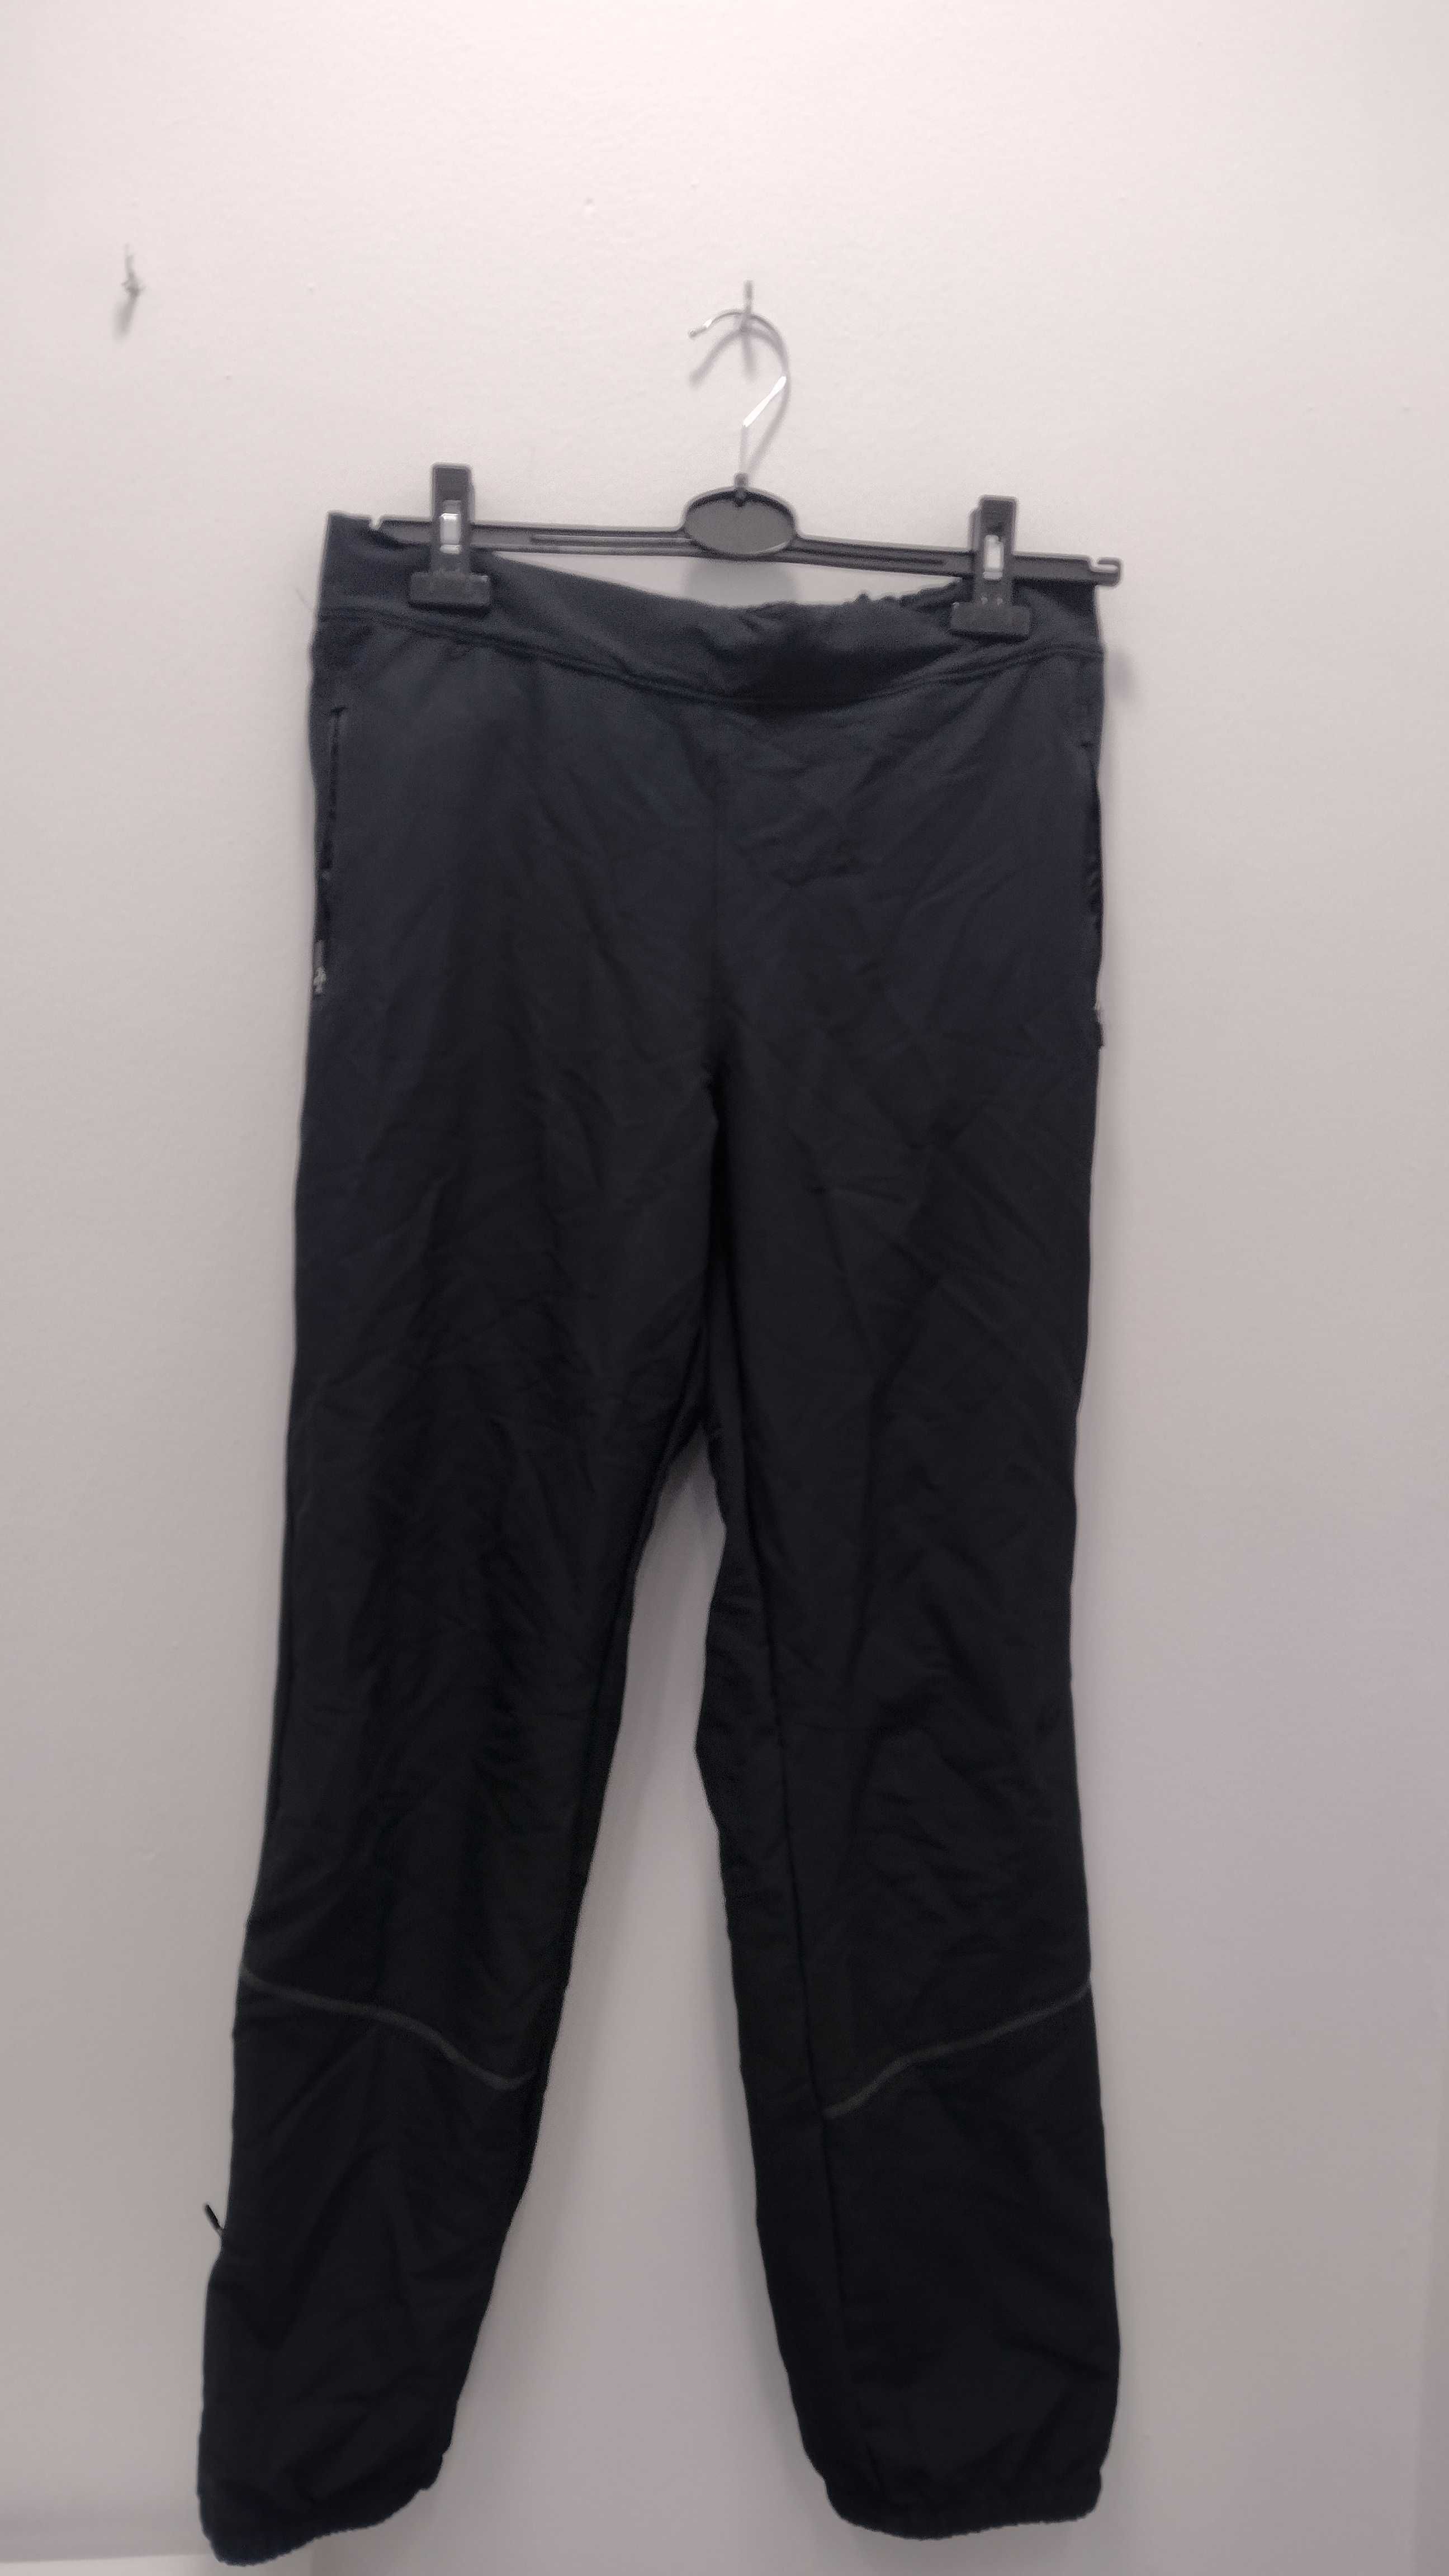 Spodnie damskie  100 % len Polo by Ralph Lauren r. 33/34 M/L